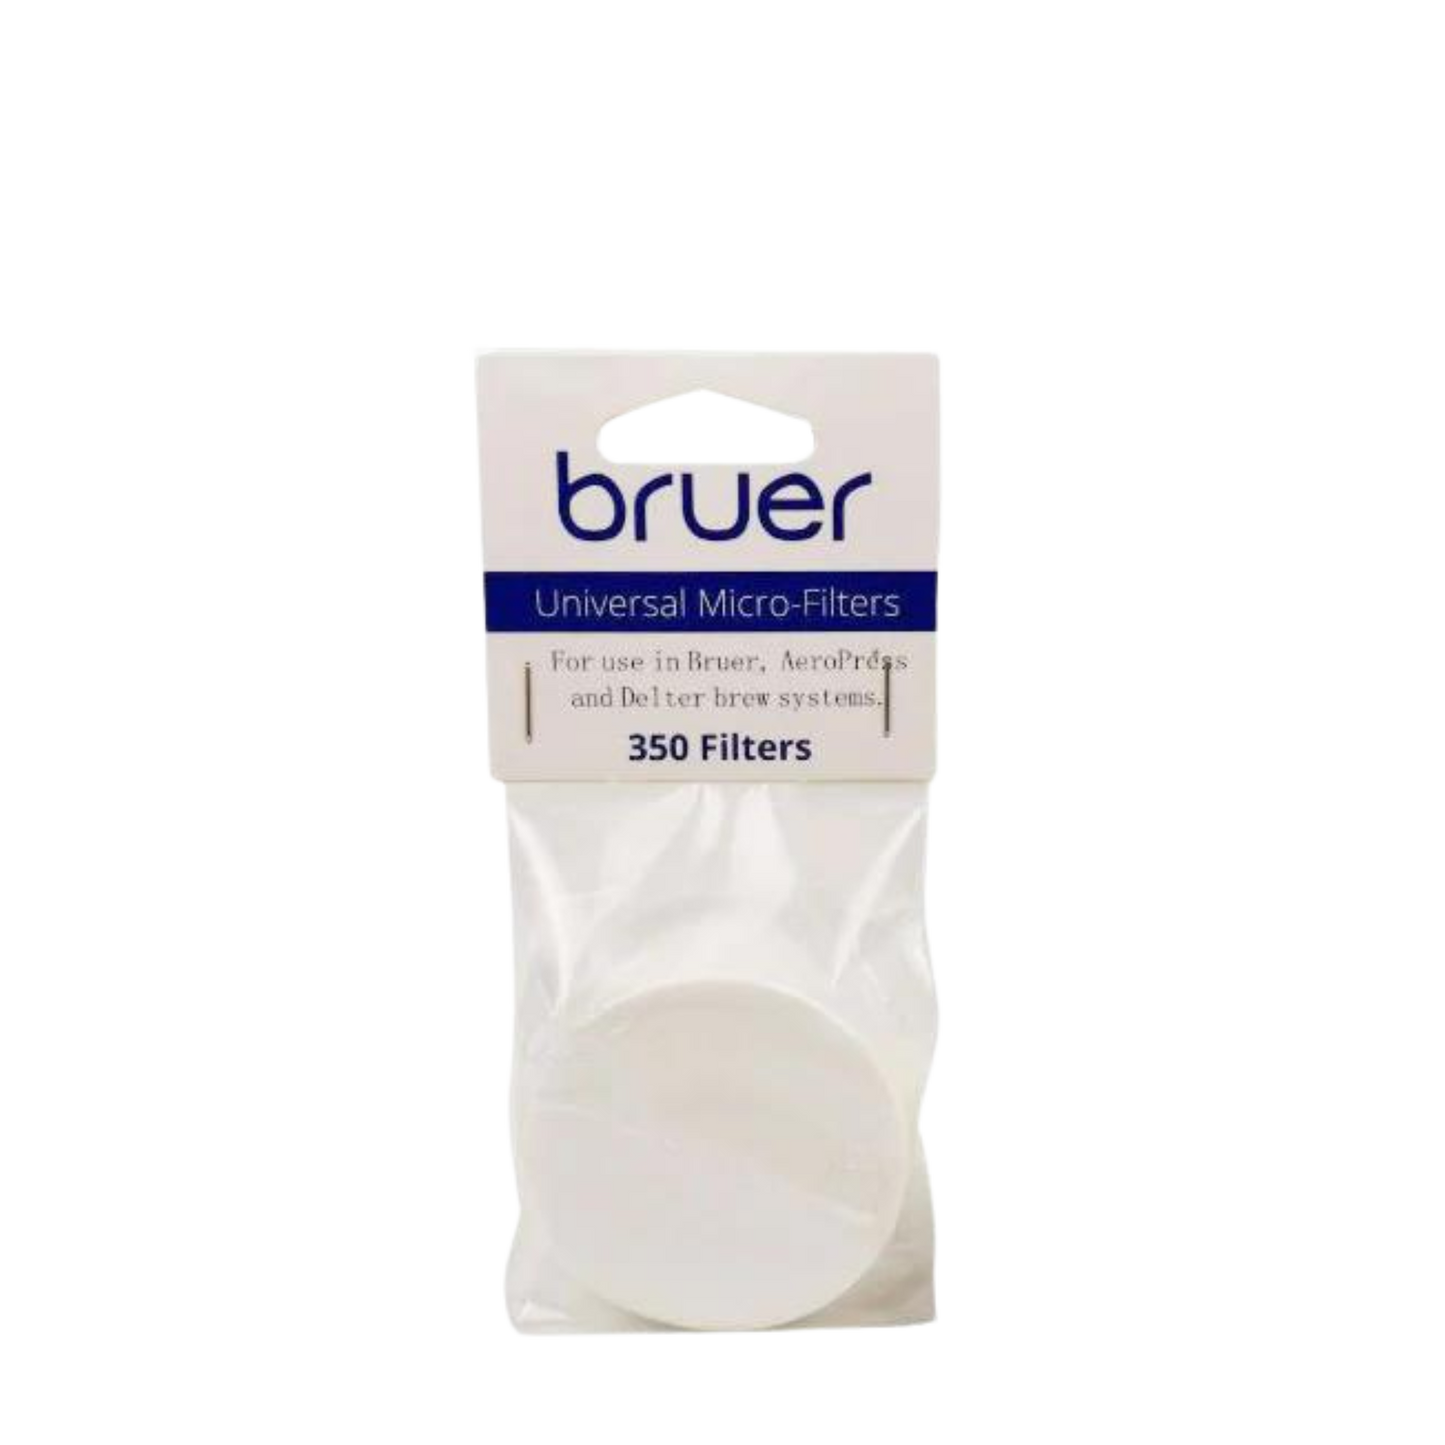 AeroPress & Bruer Filter Papers (350 Pack)